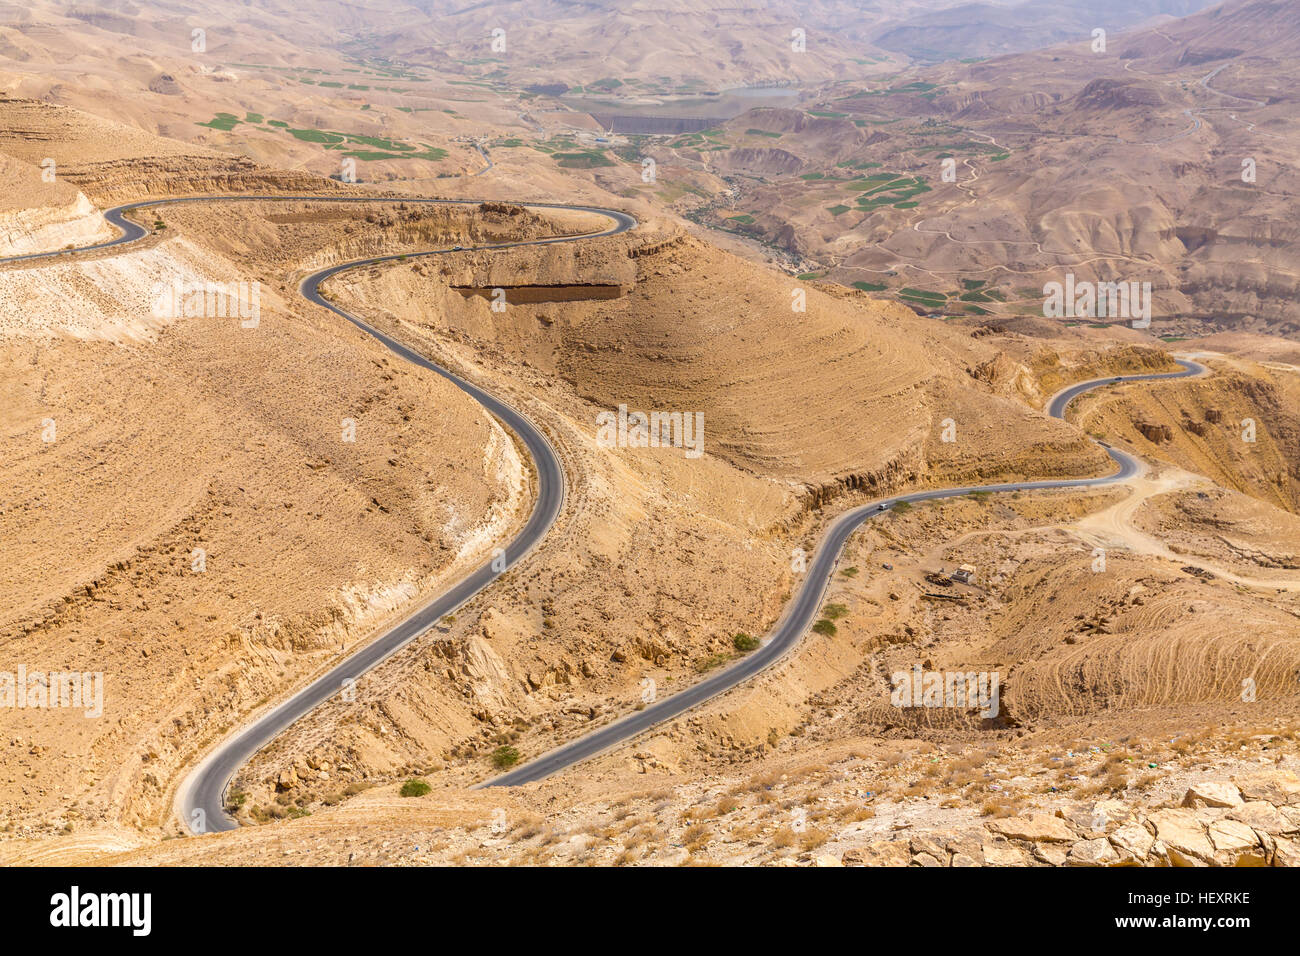 Jordan, Wadi Mujib with Kingsway Stock Photo